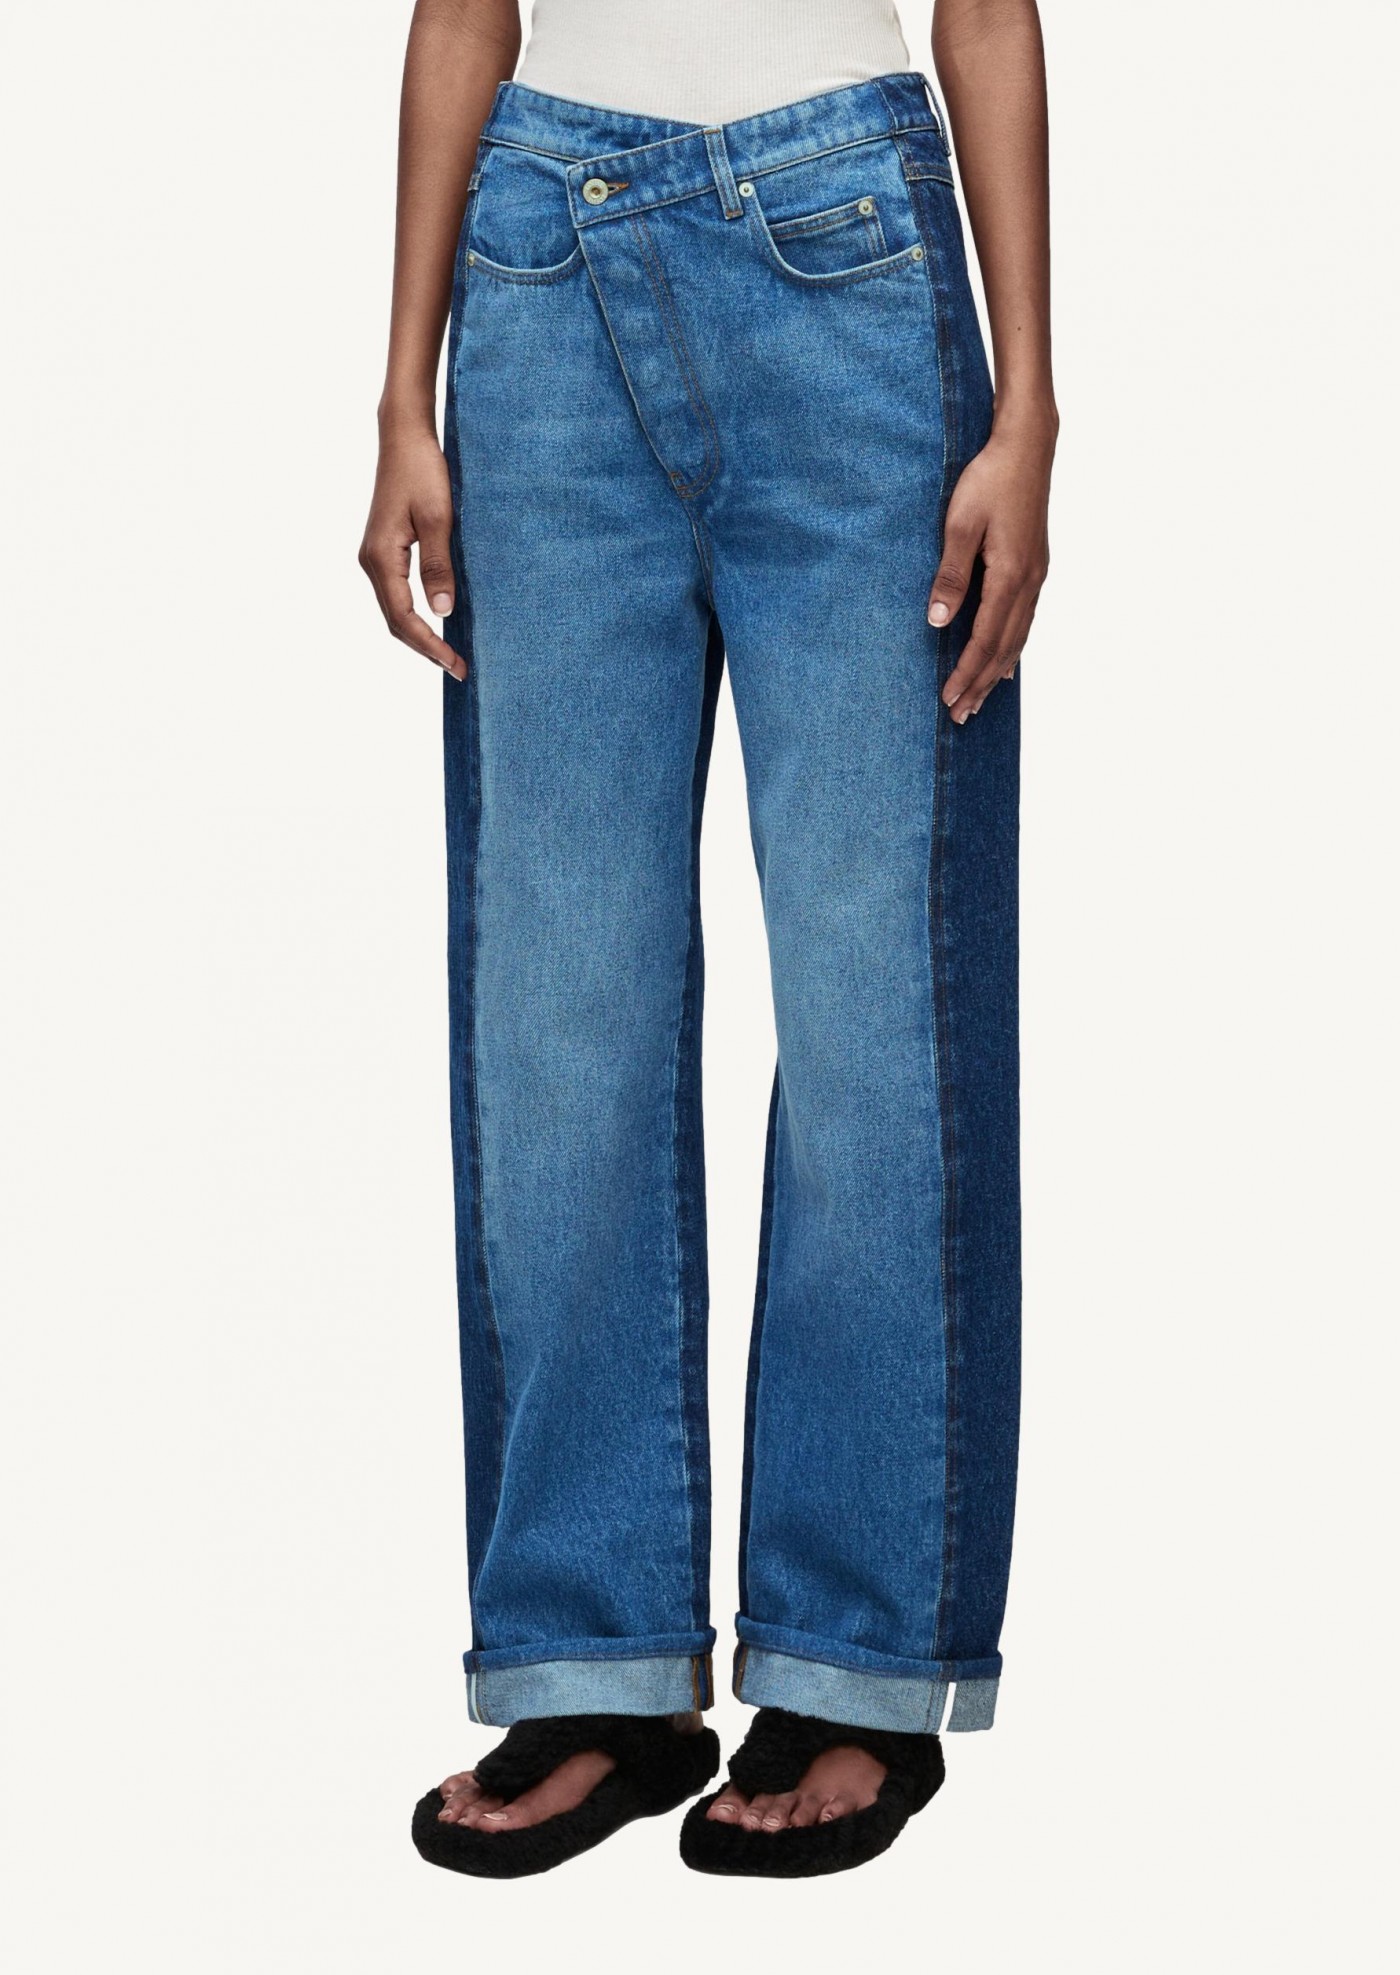 Deconstructed jeans in denim